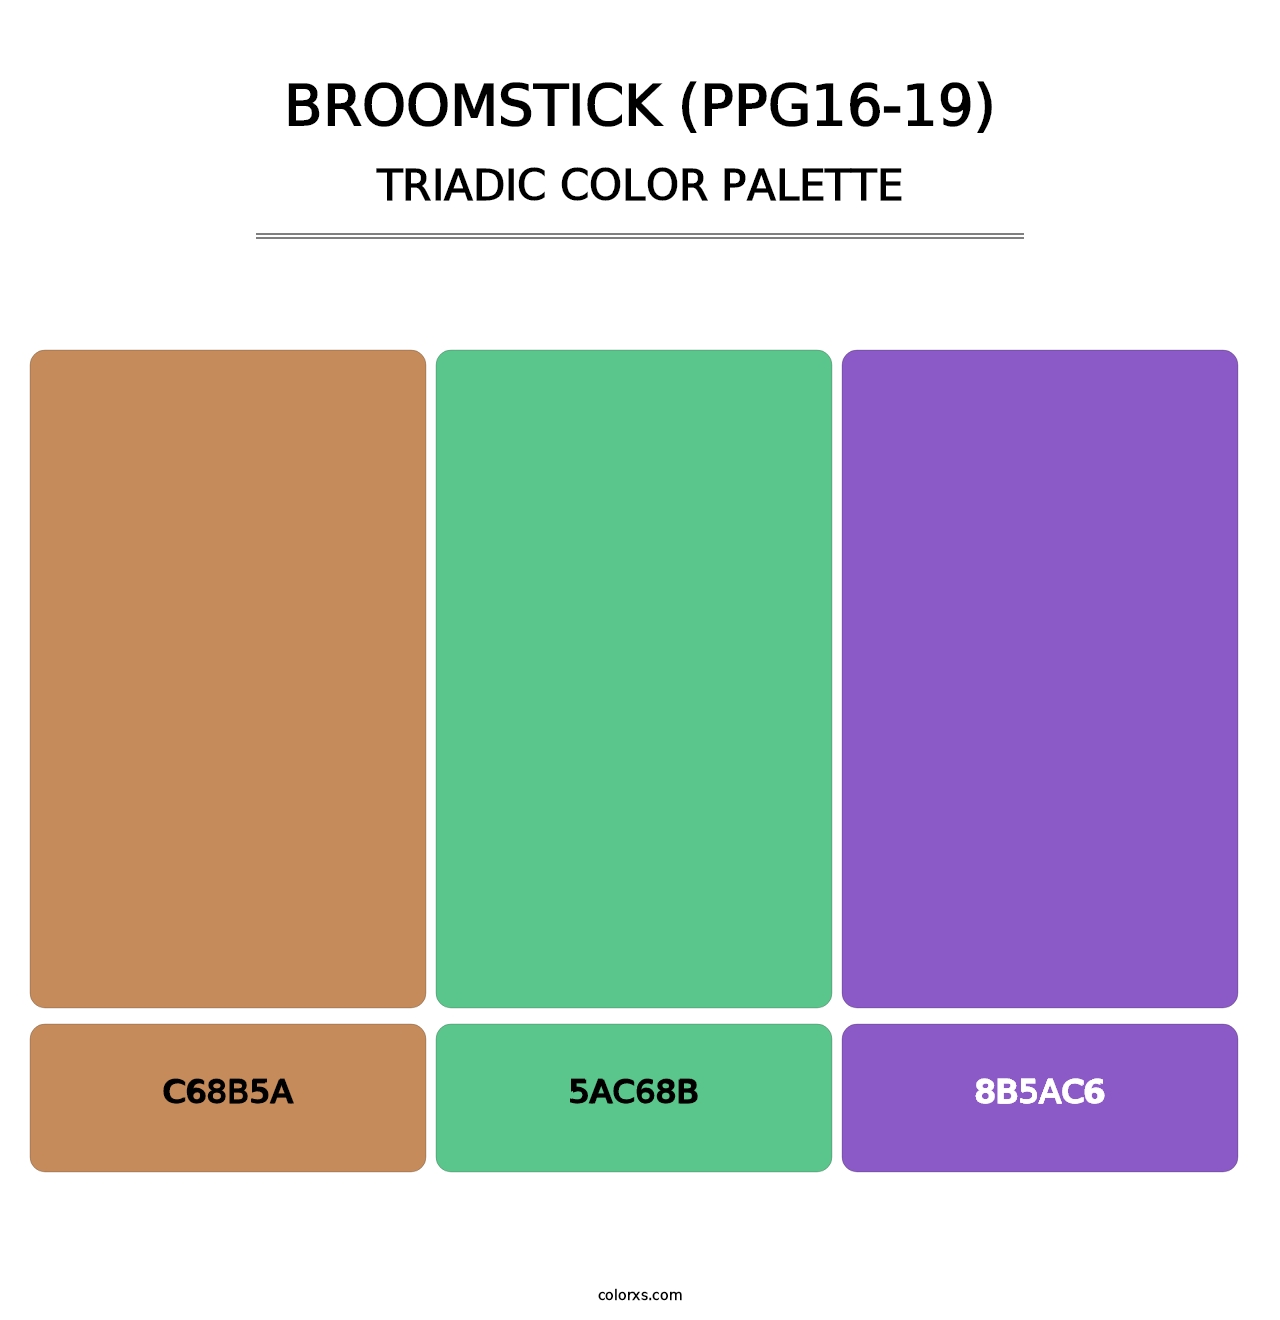 Broomstick (PPG16-19) - Triadic Color Palette